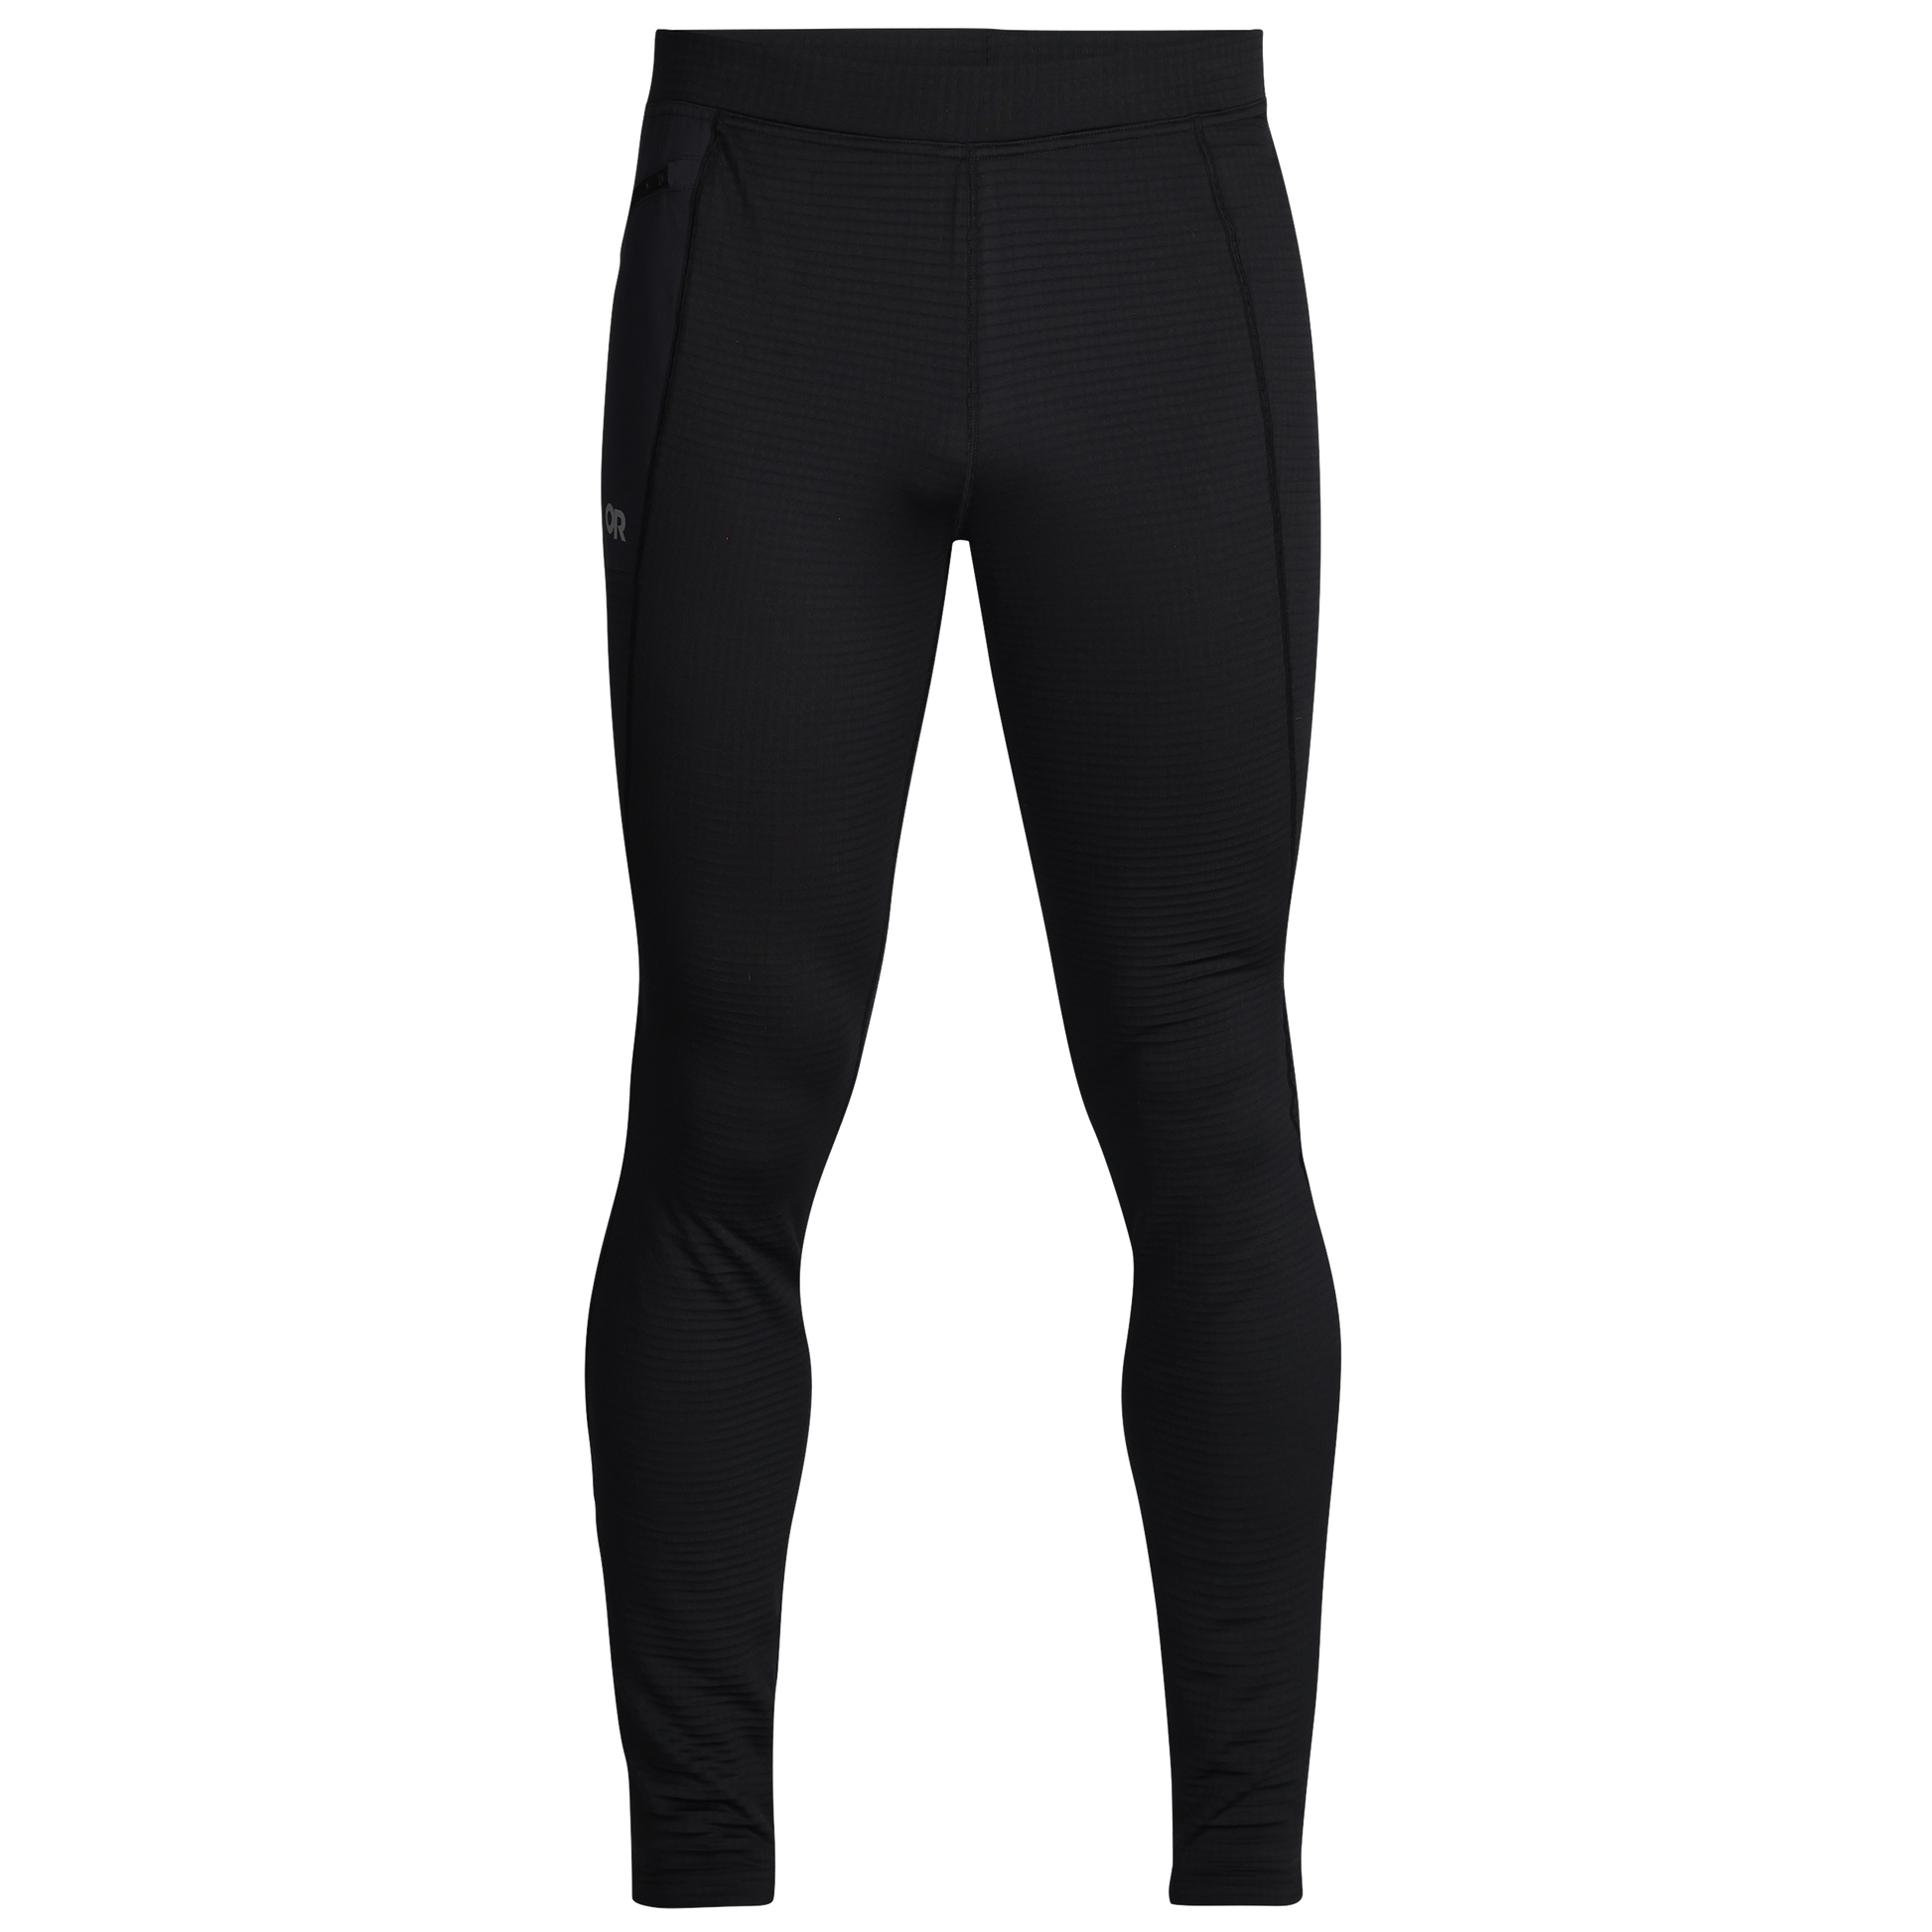 Buy Compression Pants - Men s Tights Base Layer Leggings Best Running  Workout Black Medium 31.5-34.5\ at